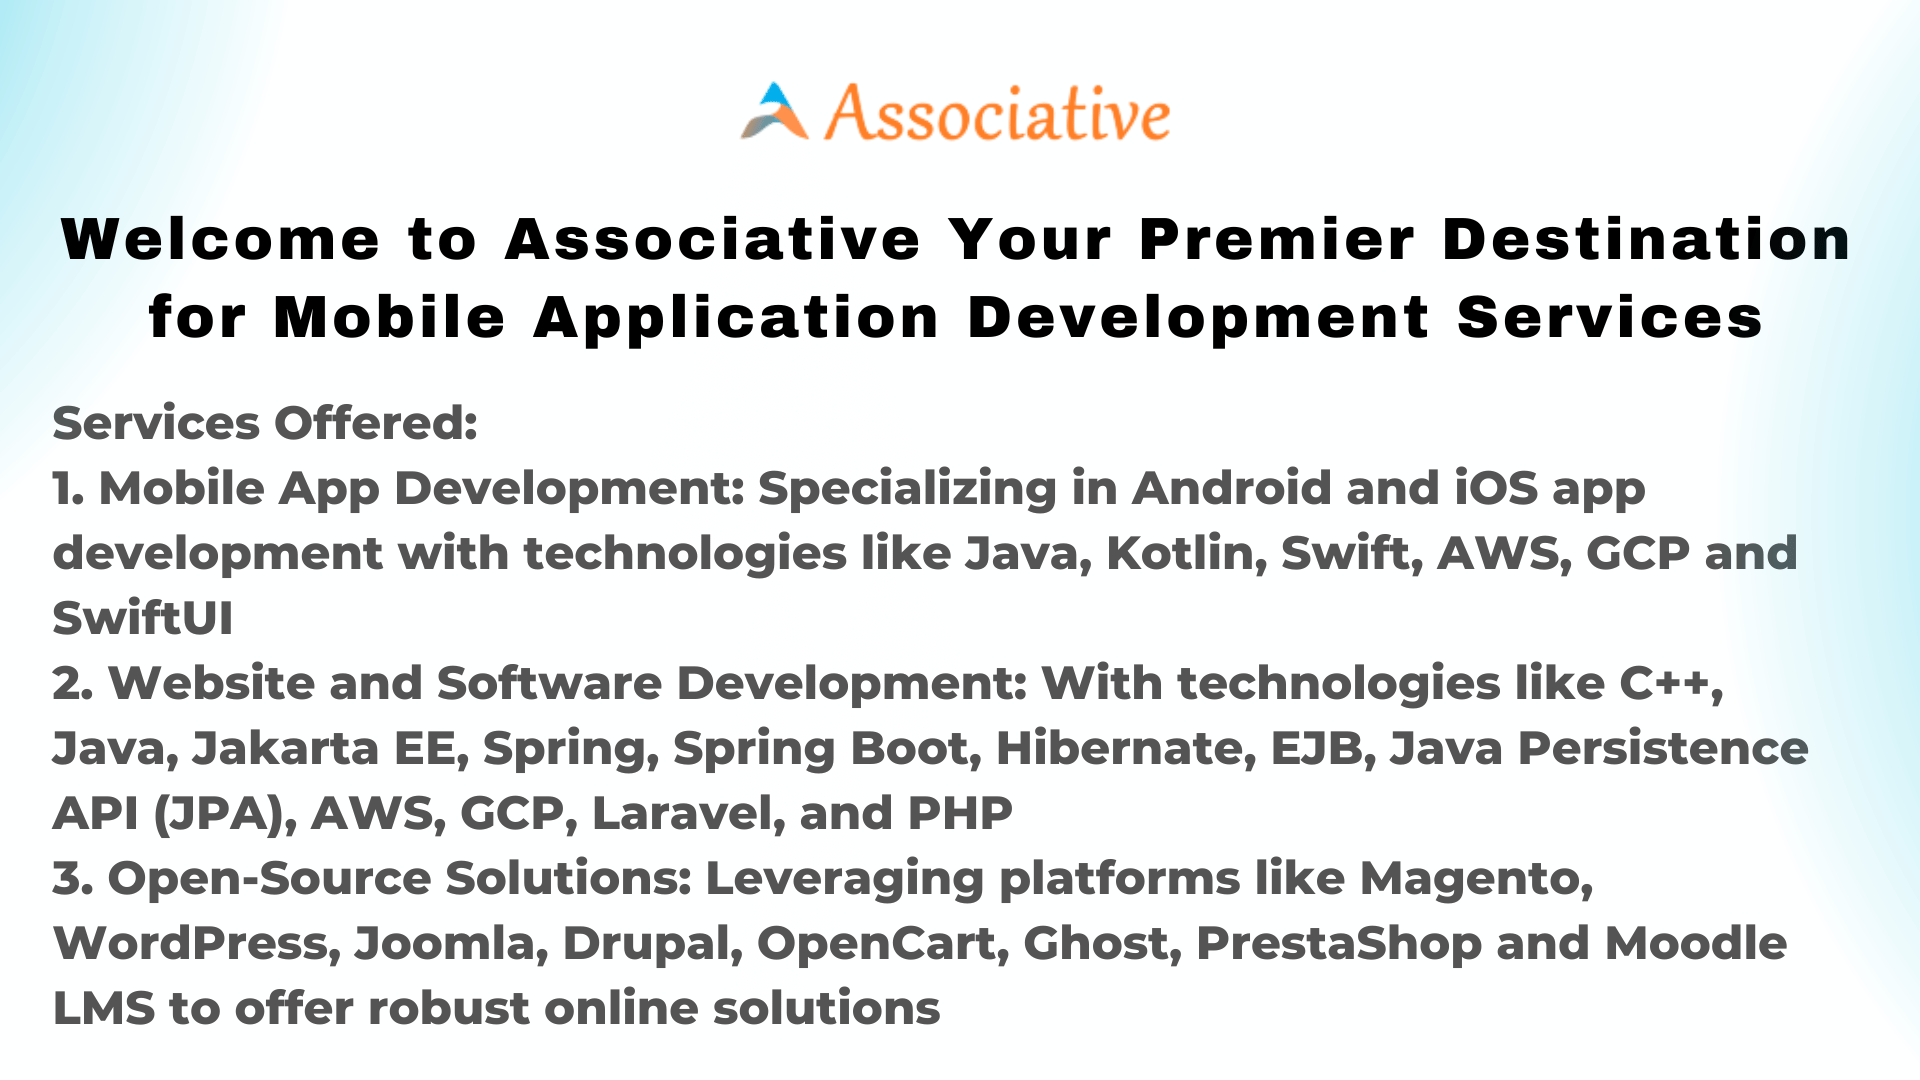 Welcome to Associative Your Premier Destination for Mobile Application Development Services